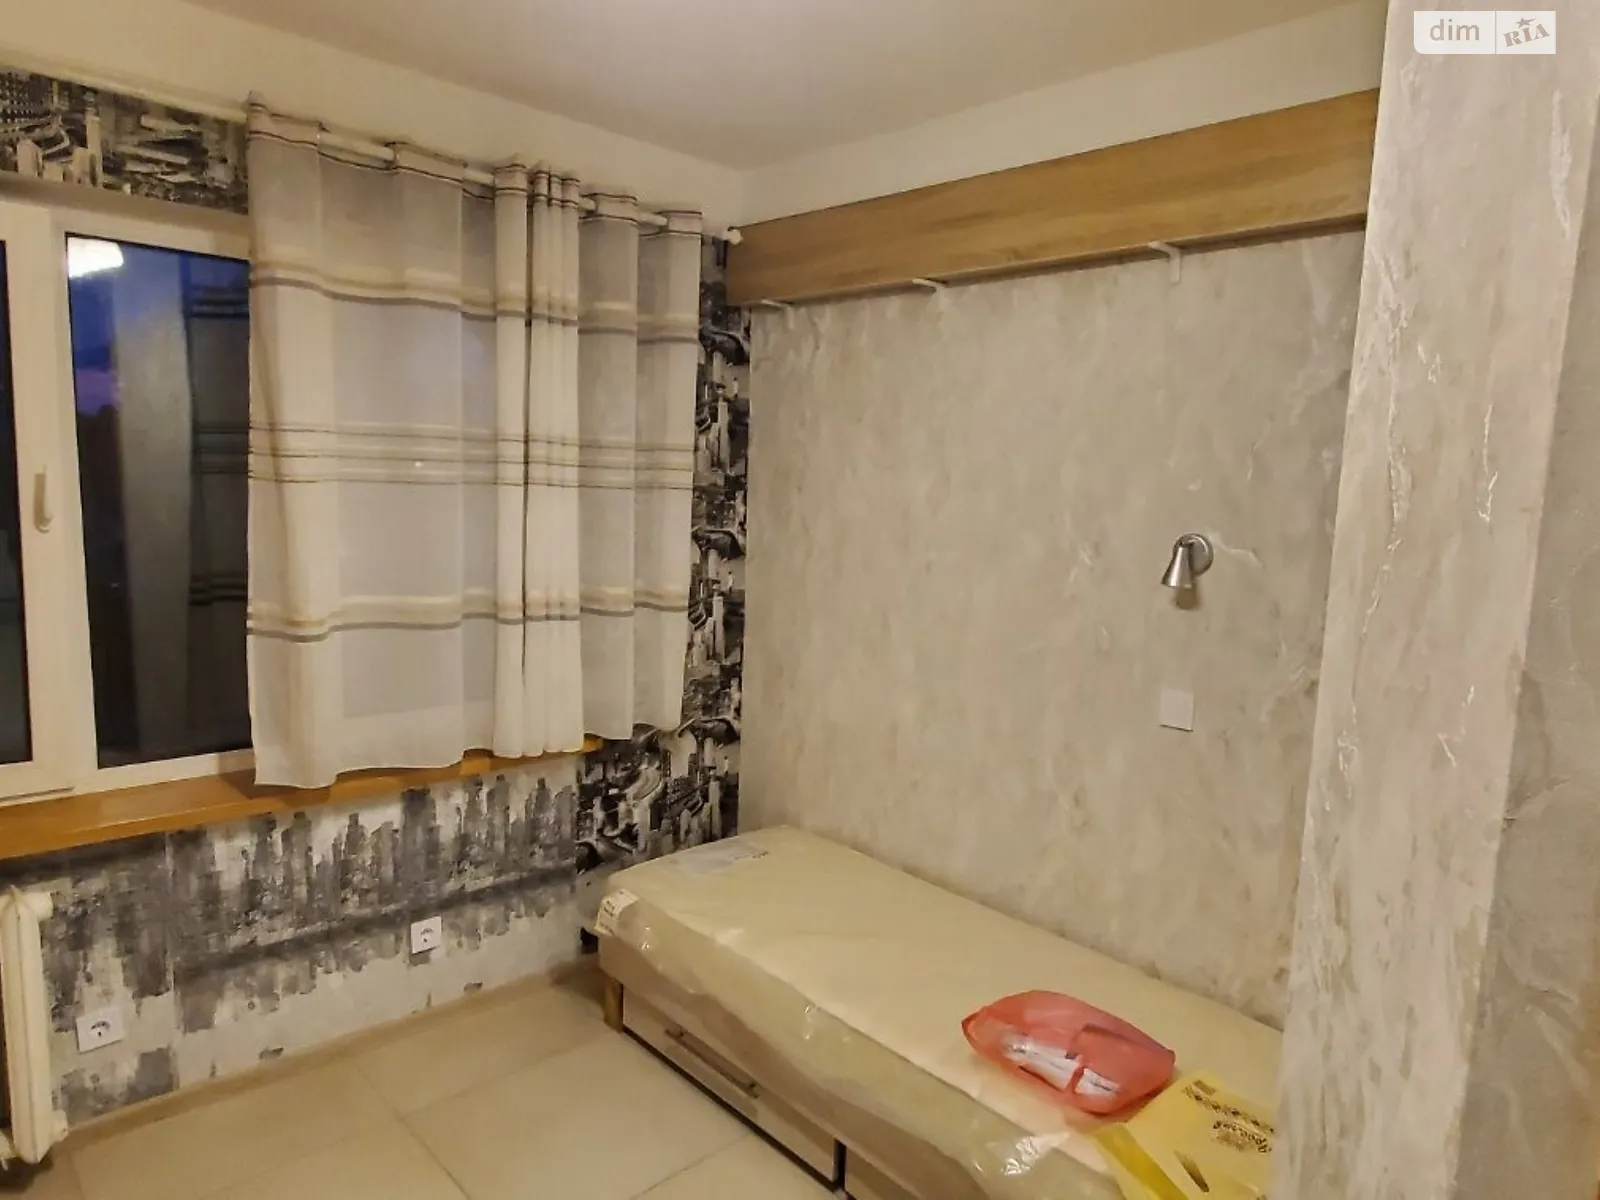 Продается комната 18.5 кв. м в Киеве, цена: 19000 $ - фото 1